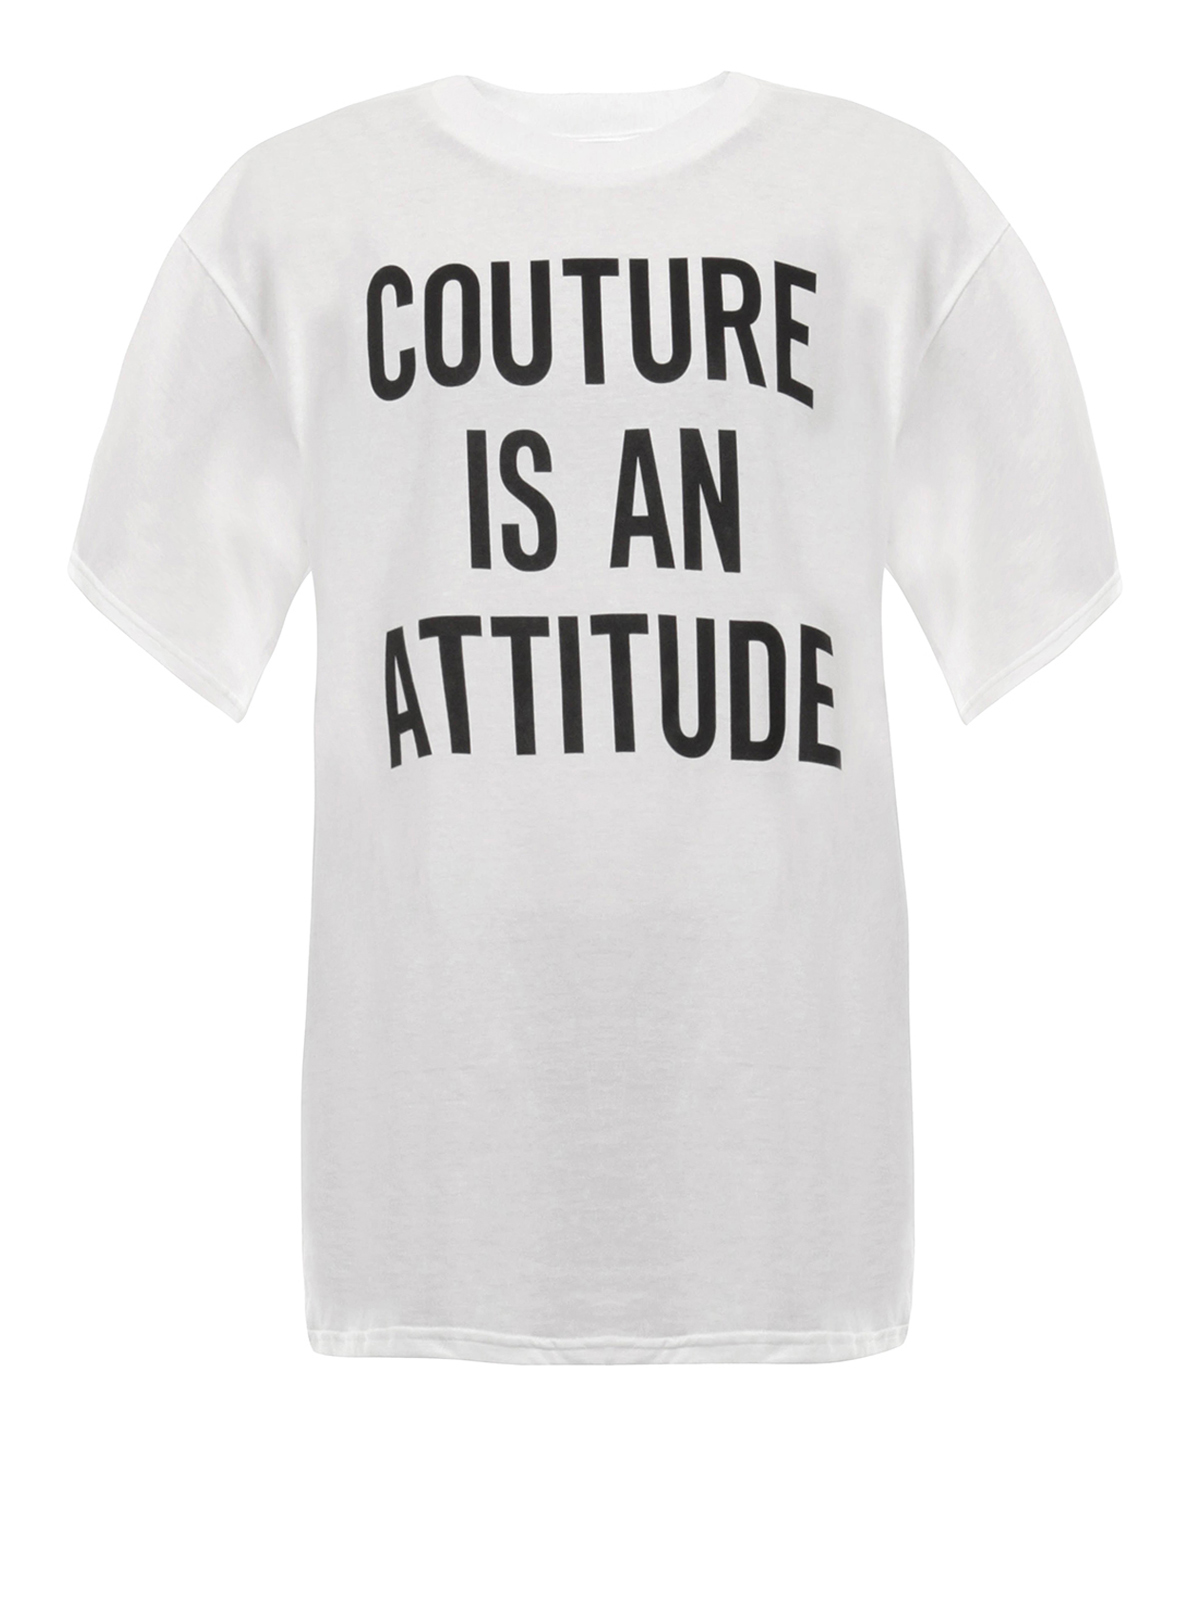 Attitude футболка мужская. Футболка Bad attitude. Rock attitude футболка.